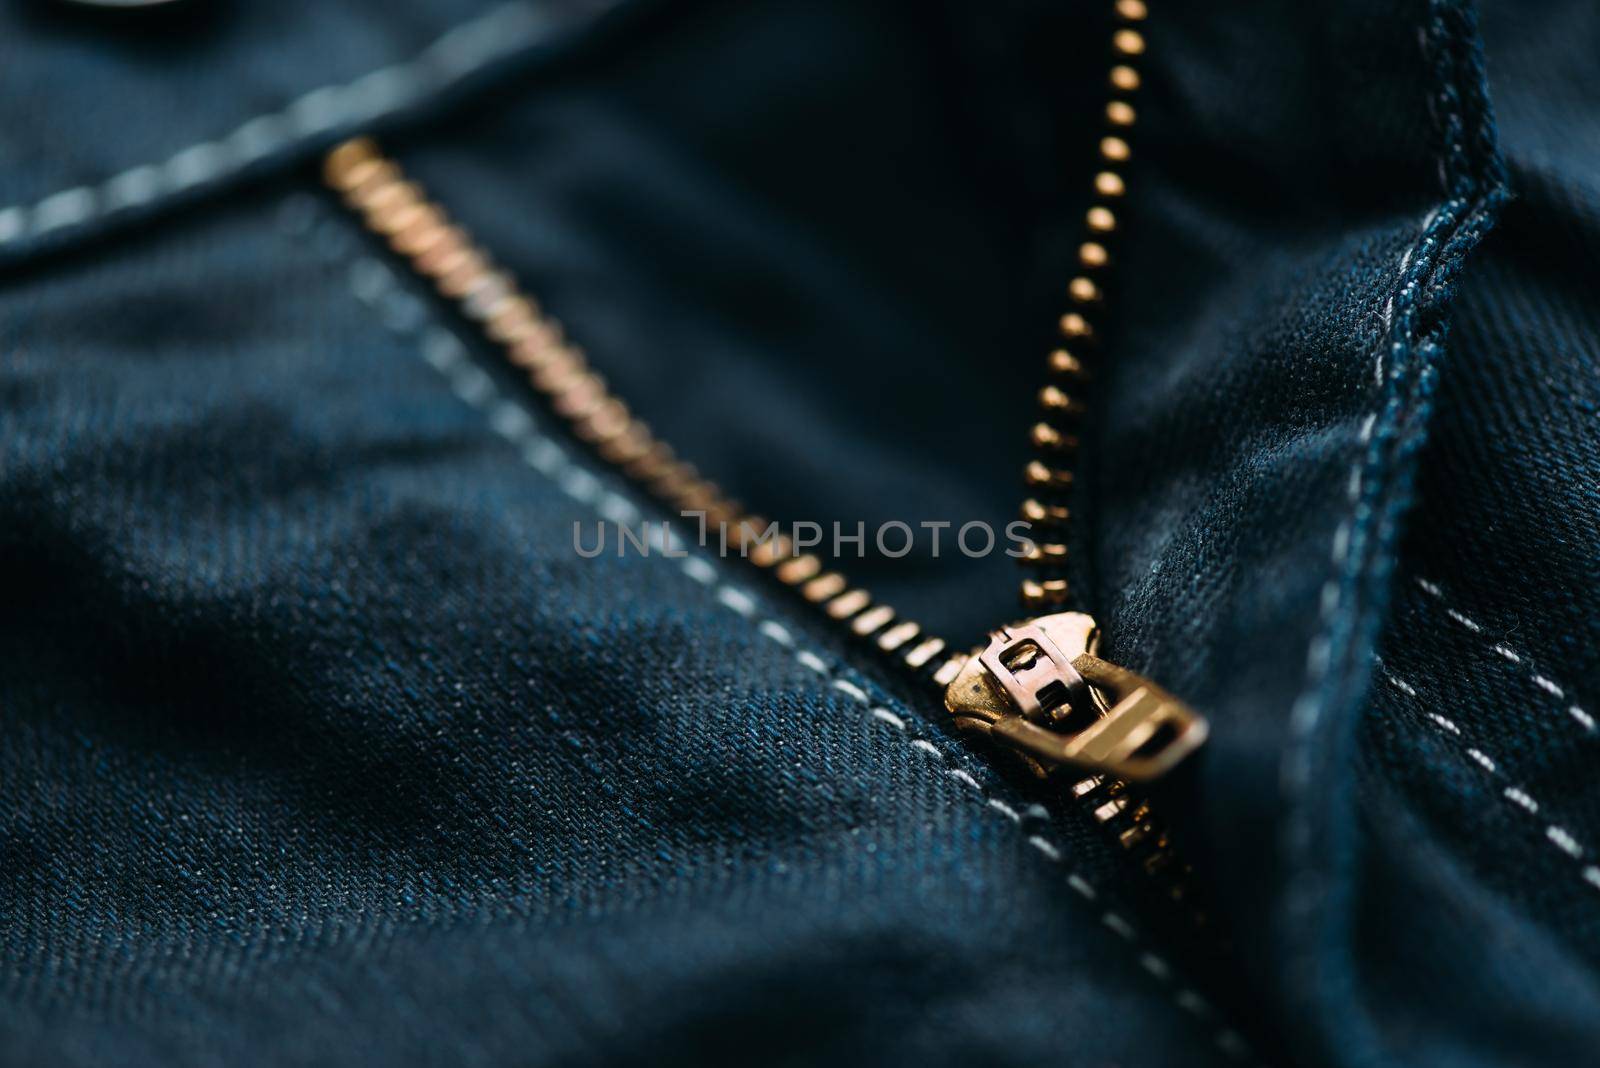 Zipper of denim jeans, closeup detail.